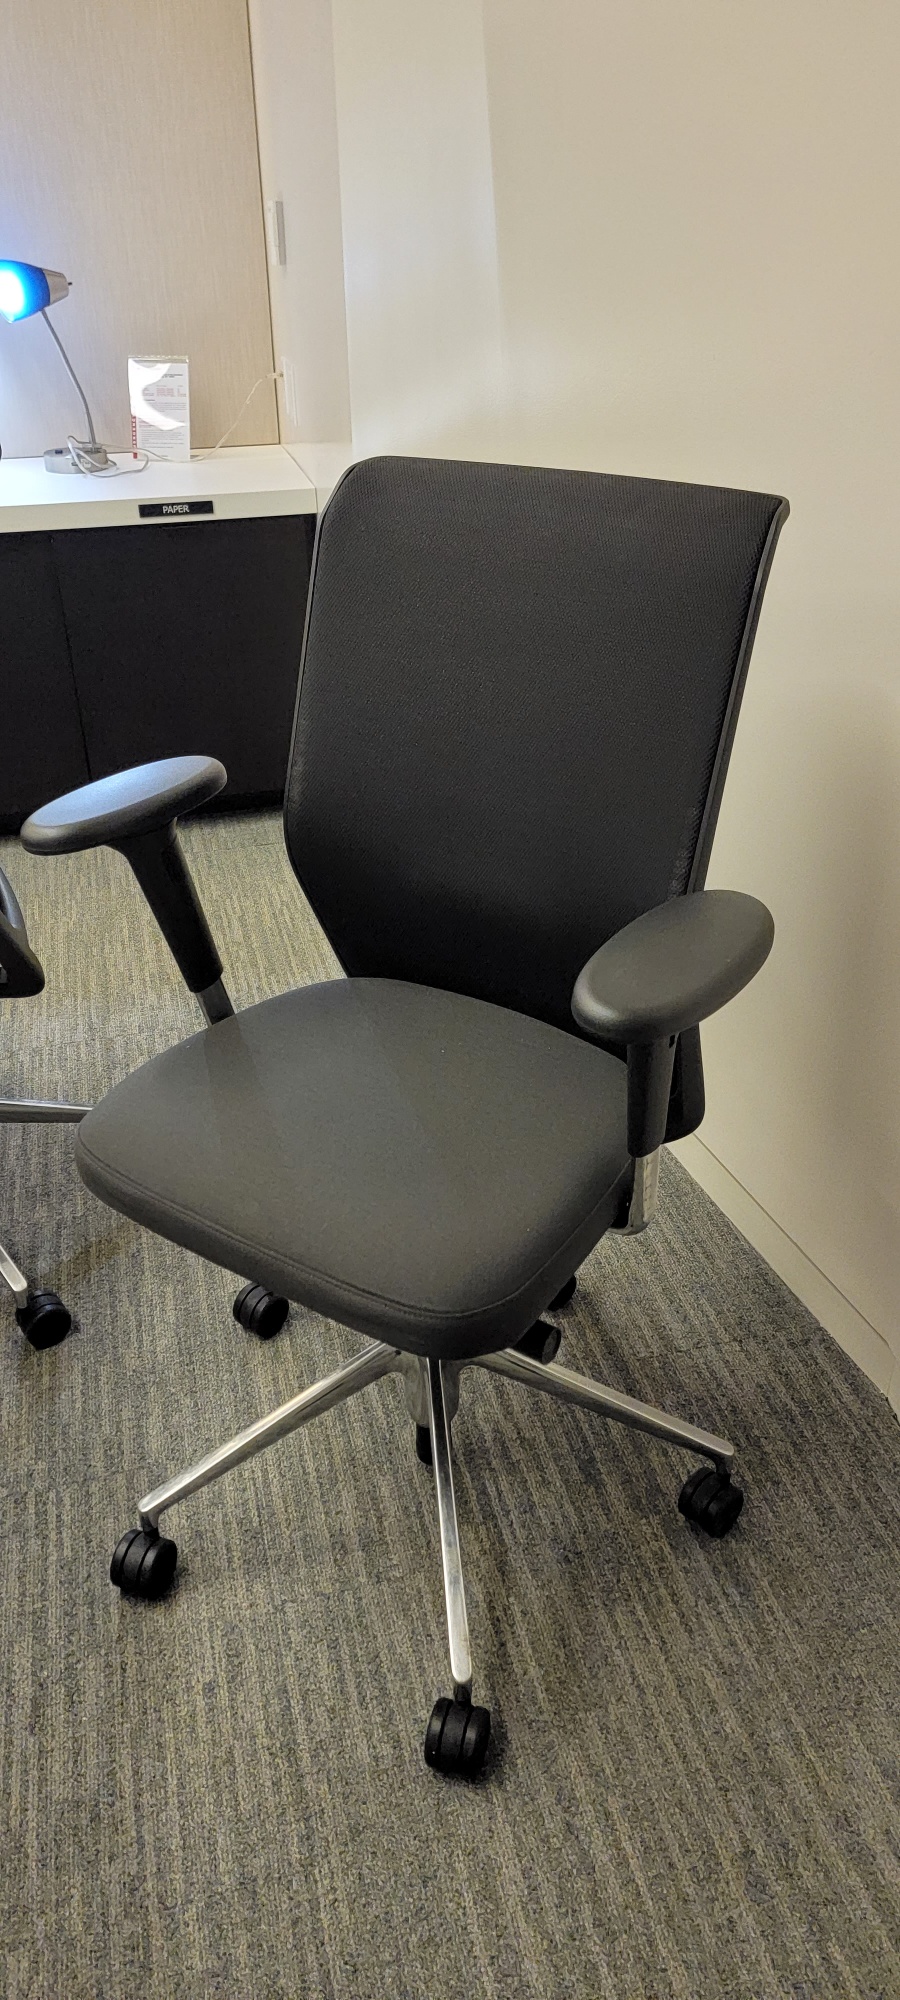 C61667 - Vitra Desk Chairs